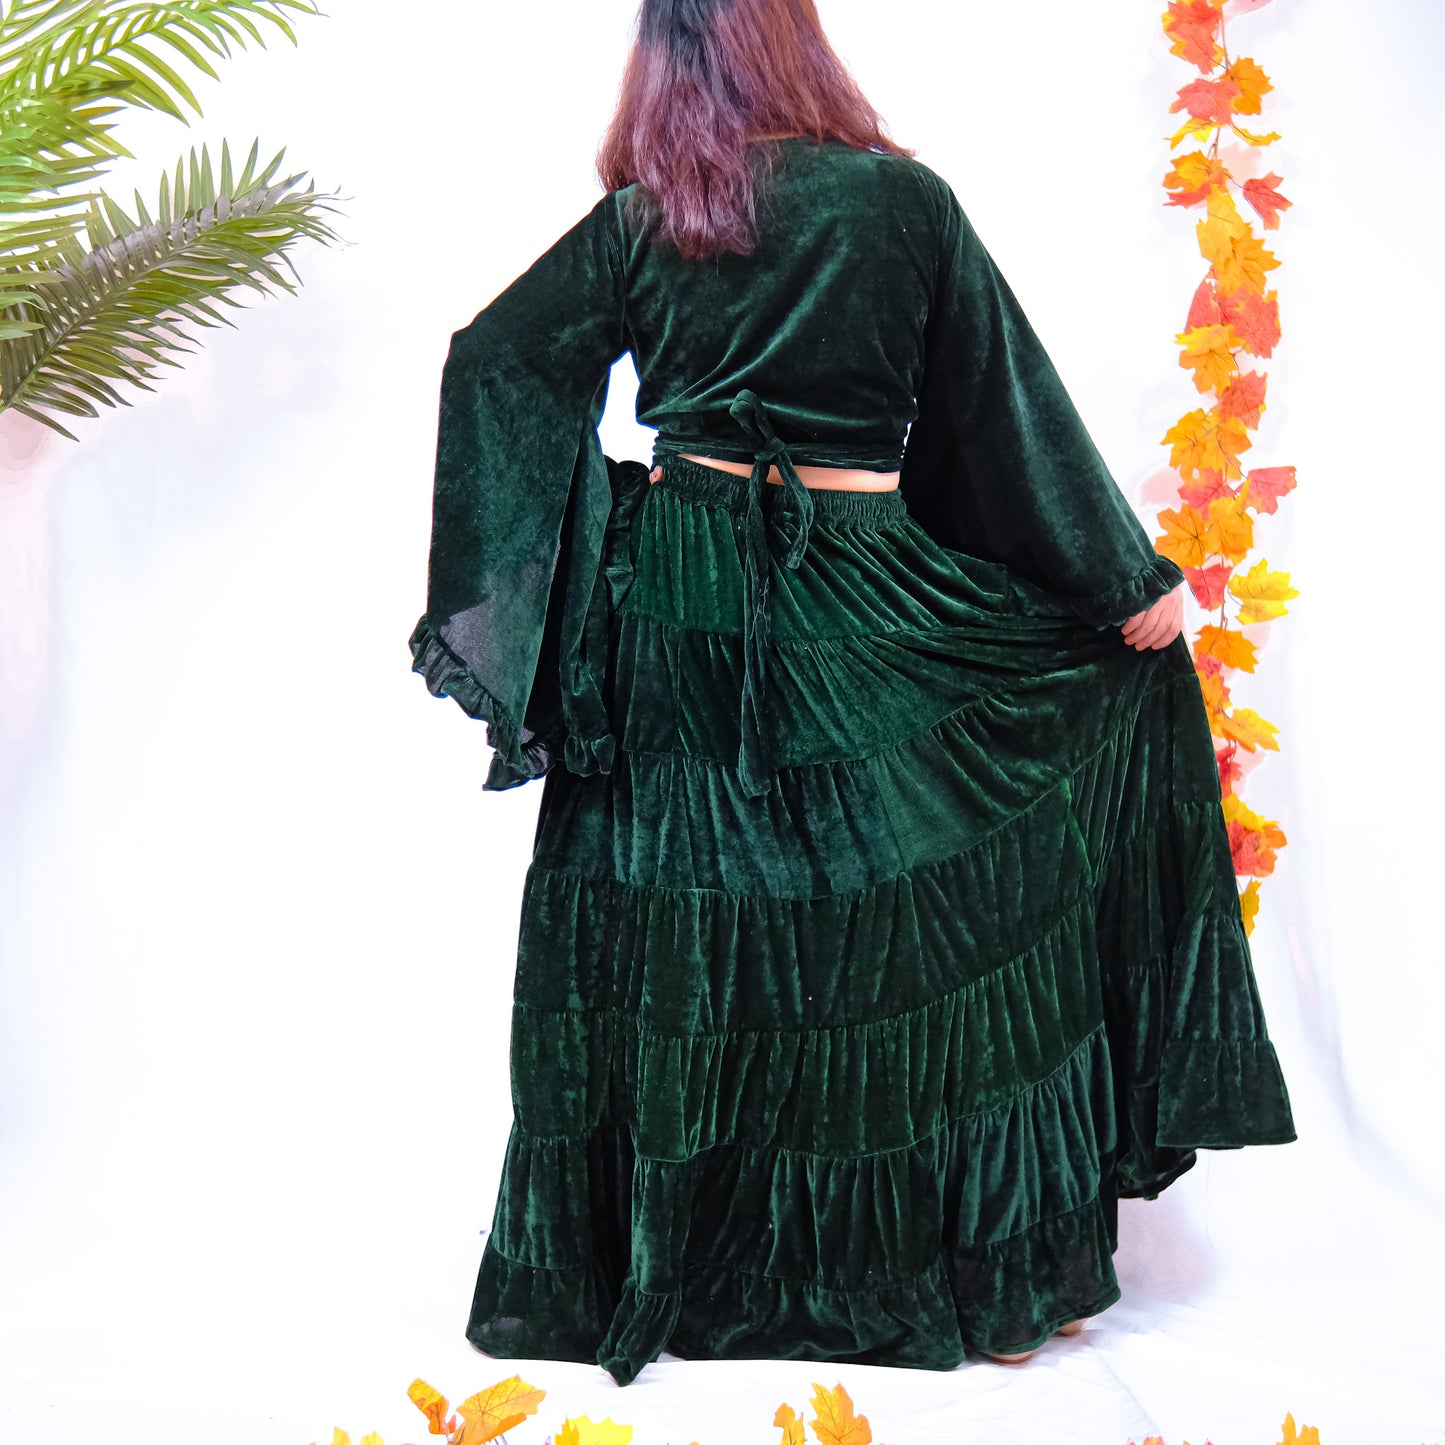 Bohemian Style Flowy Velvet Skirt Set with Ruffle Top